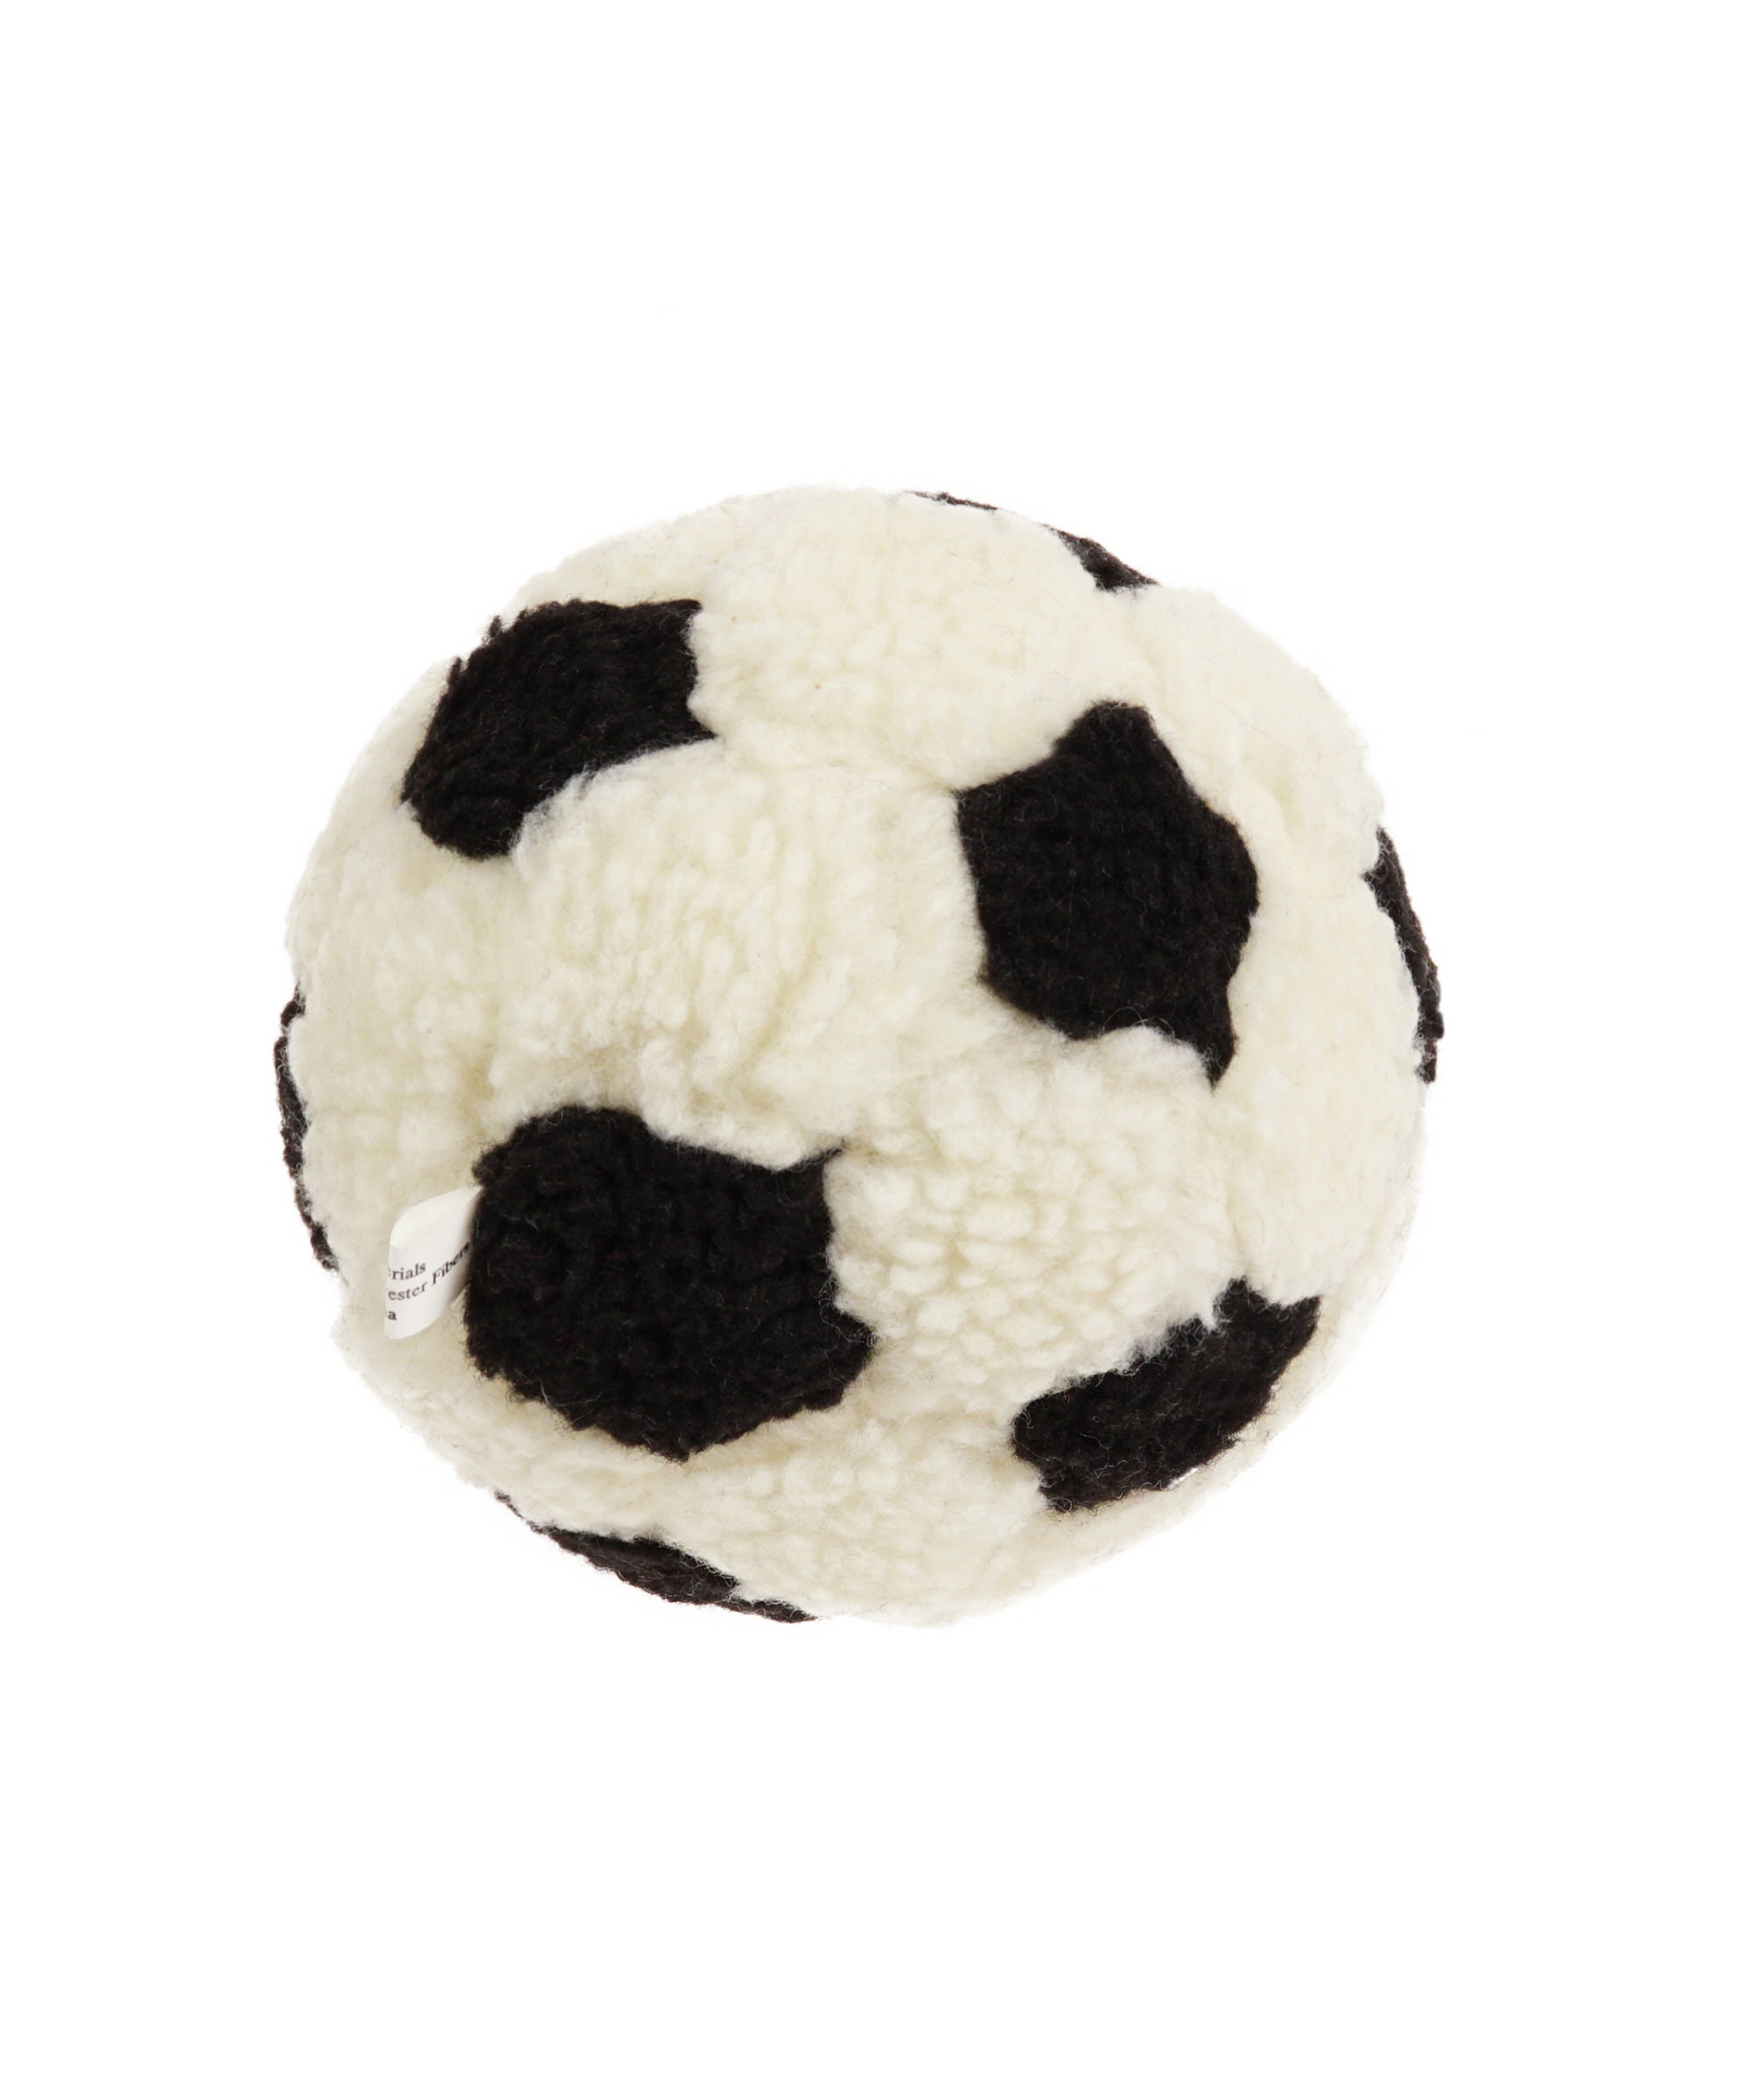 stuffed soccer ball dog toy